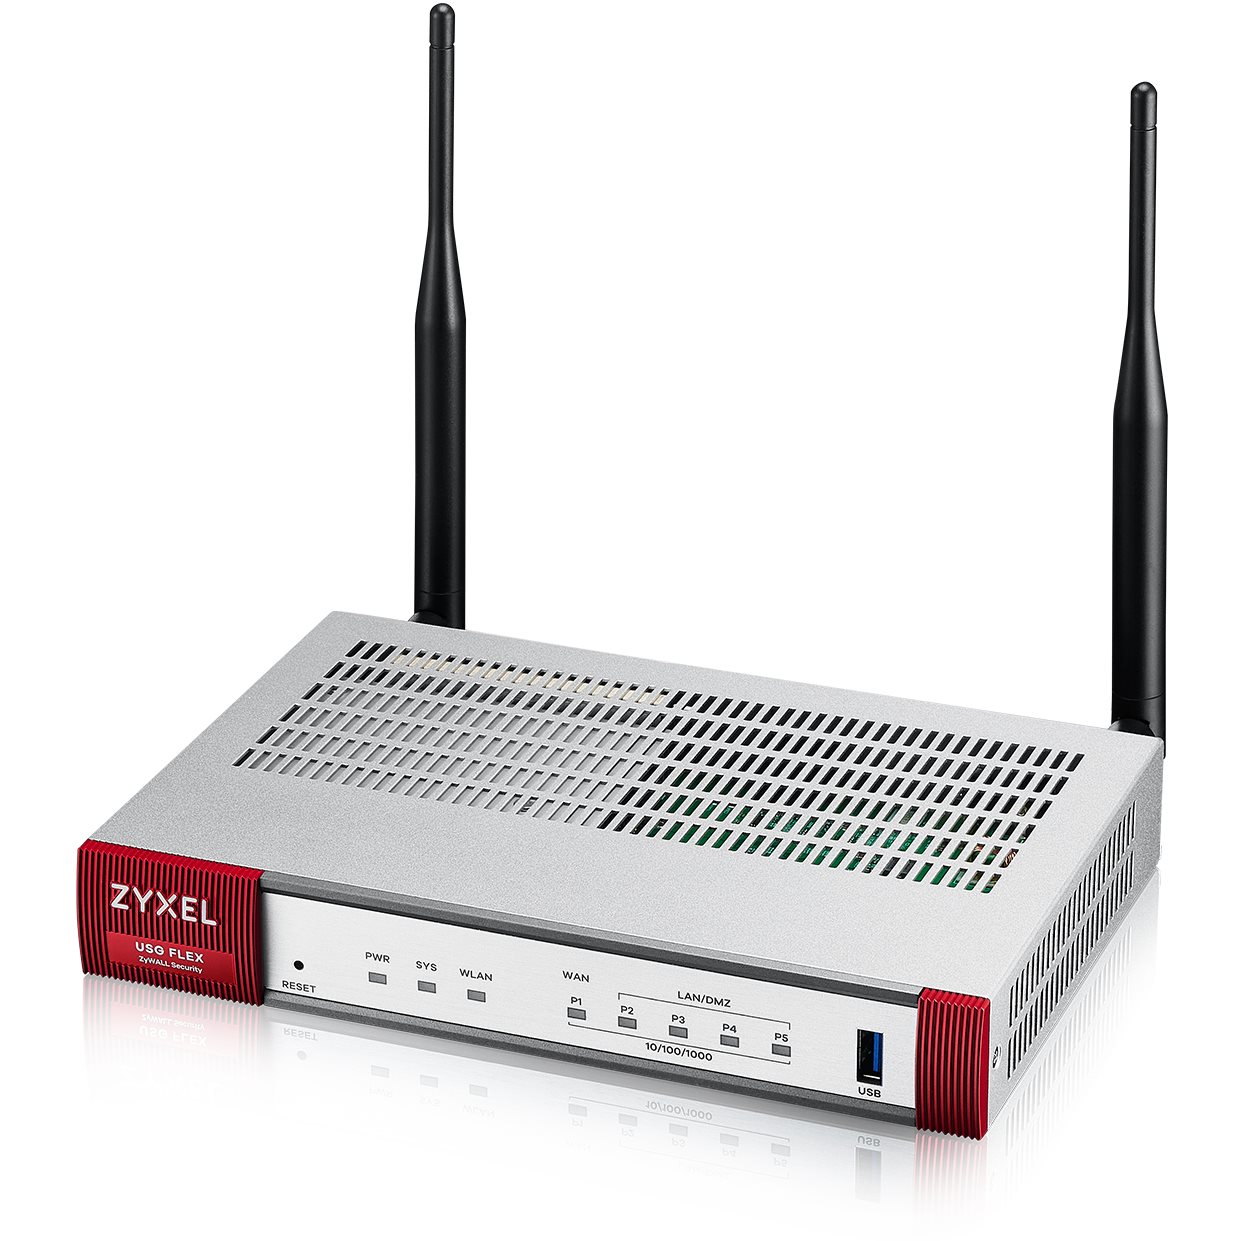   Routeurs  pro   Firewall Flex100 4 LAN +1 WAN +Wifi ax USGFLEX100AX-EU0101F